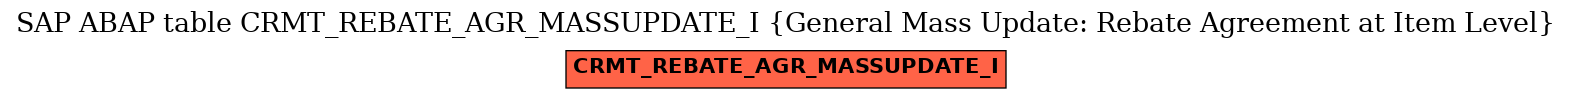 E-R Diagram for table CRMT_REBATE_AGR_MASSUPDATE_I (General Mass Update: Rebate Agreement at Item Level)